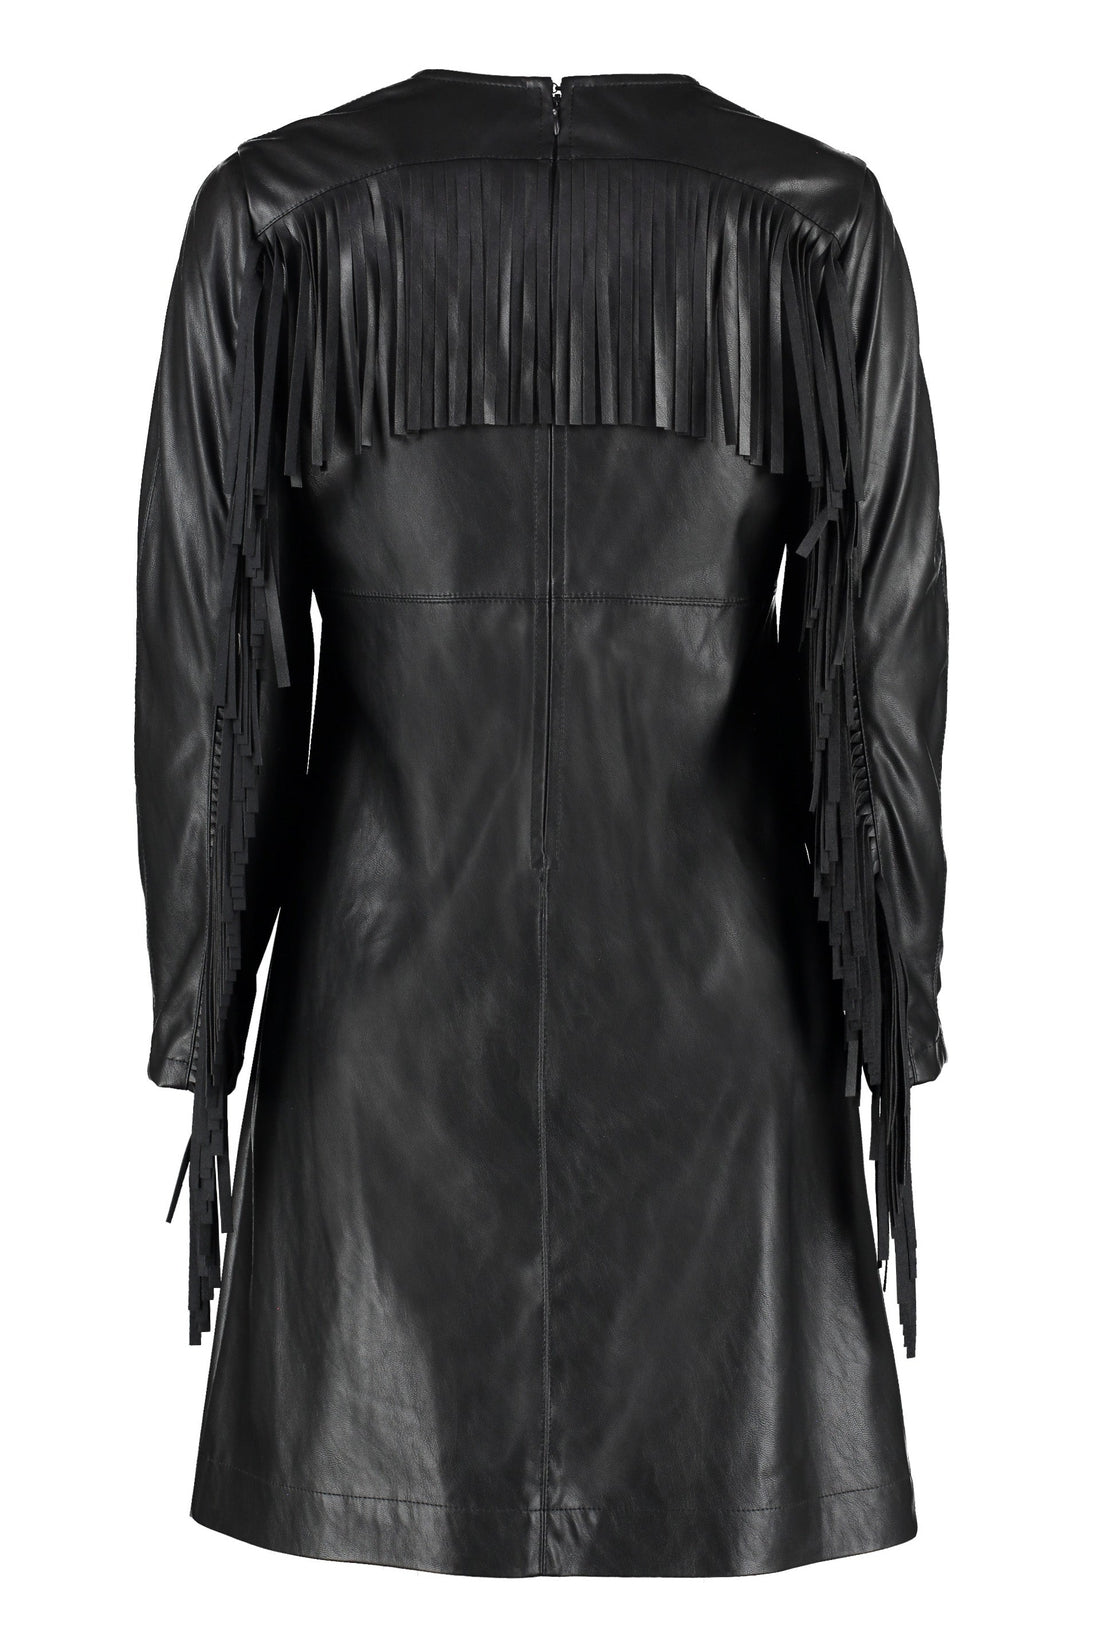 Pinko-OUTLET-SALE-Brandy faux leather dress-ARCHIVIST